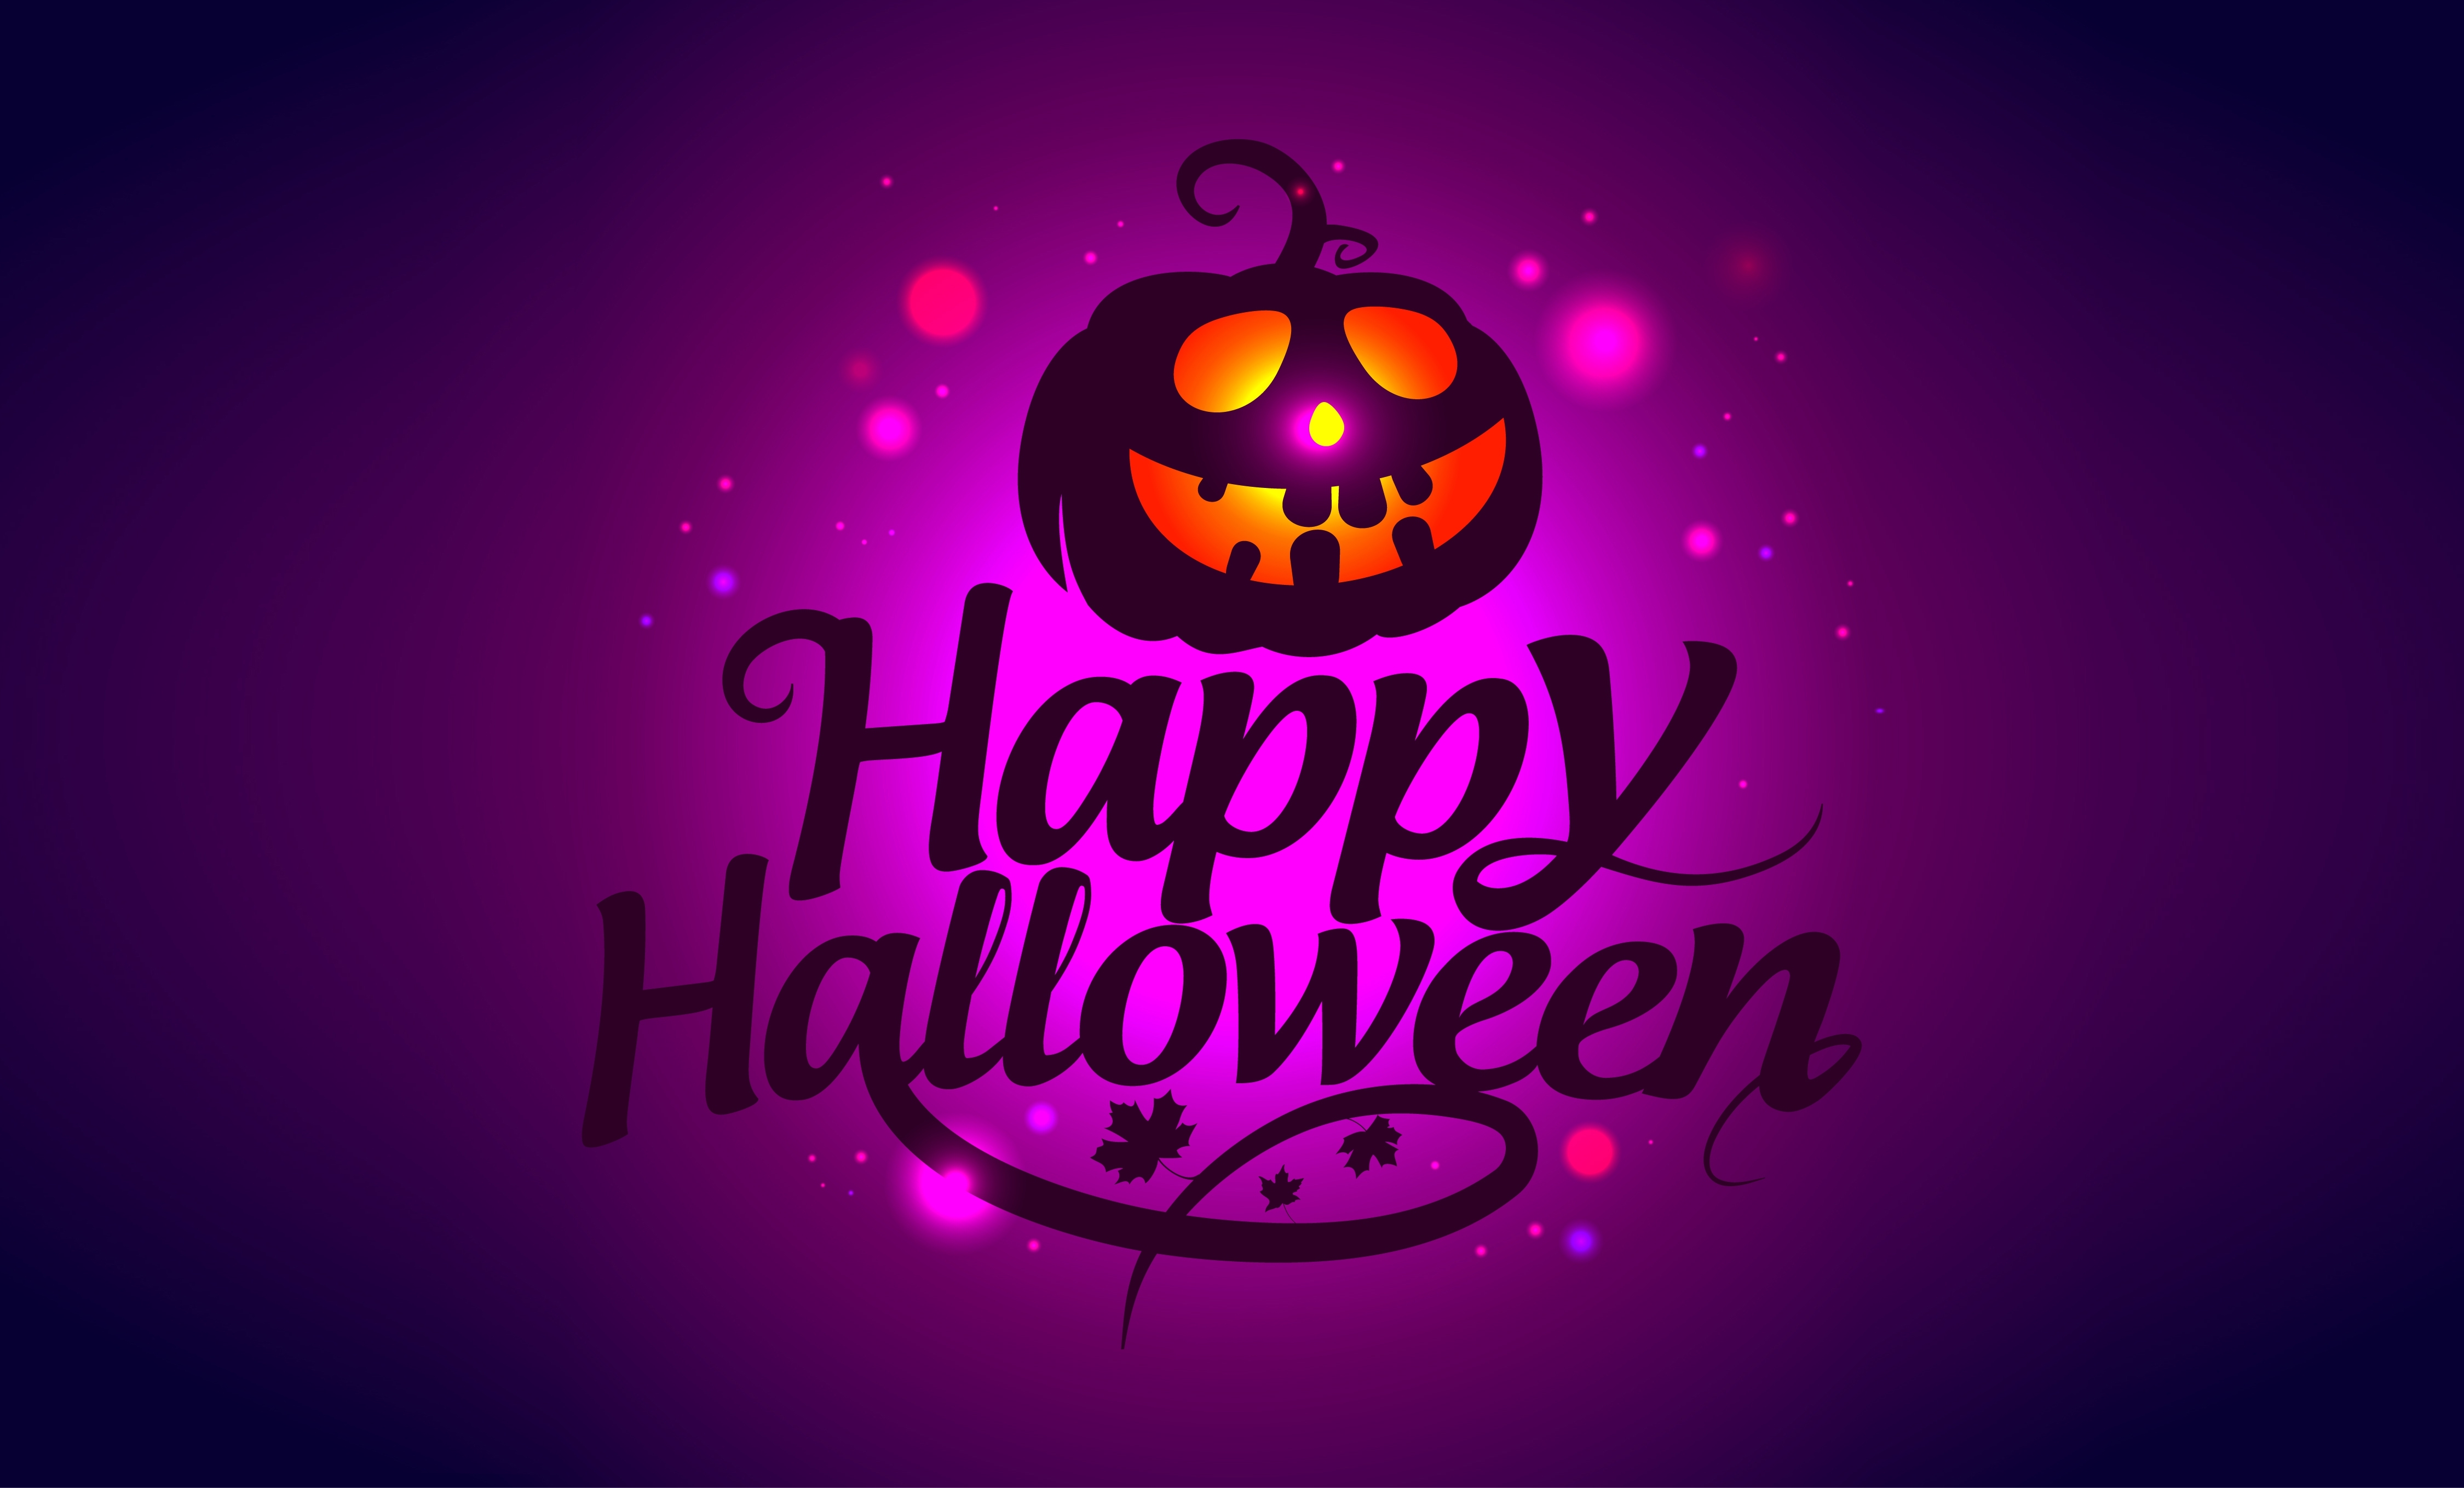 K, #Happy Halloween Gallery HD Wallpaper